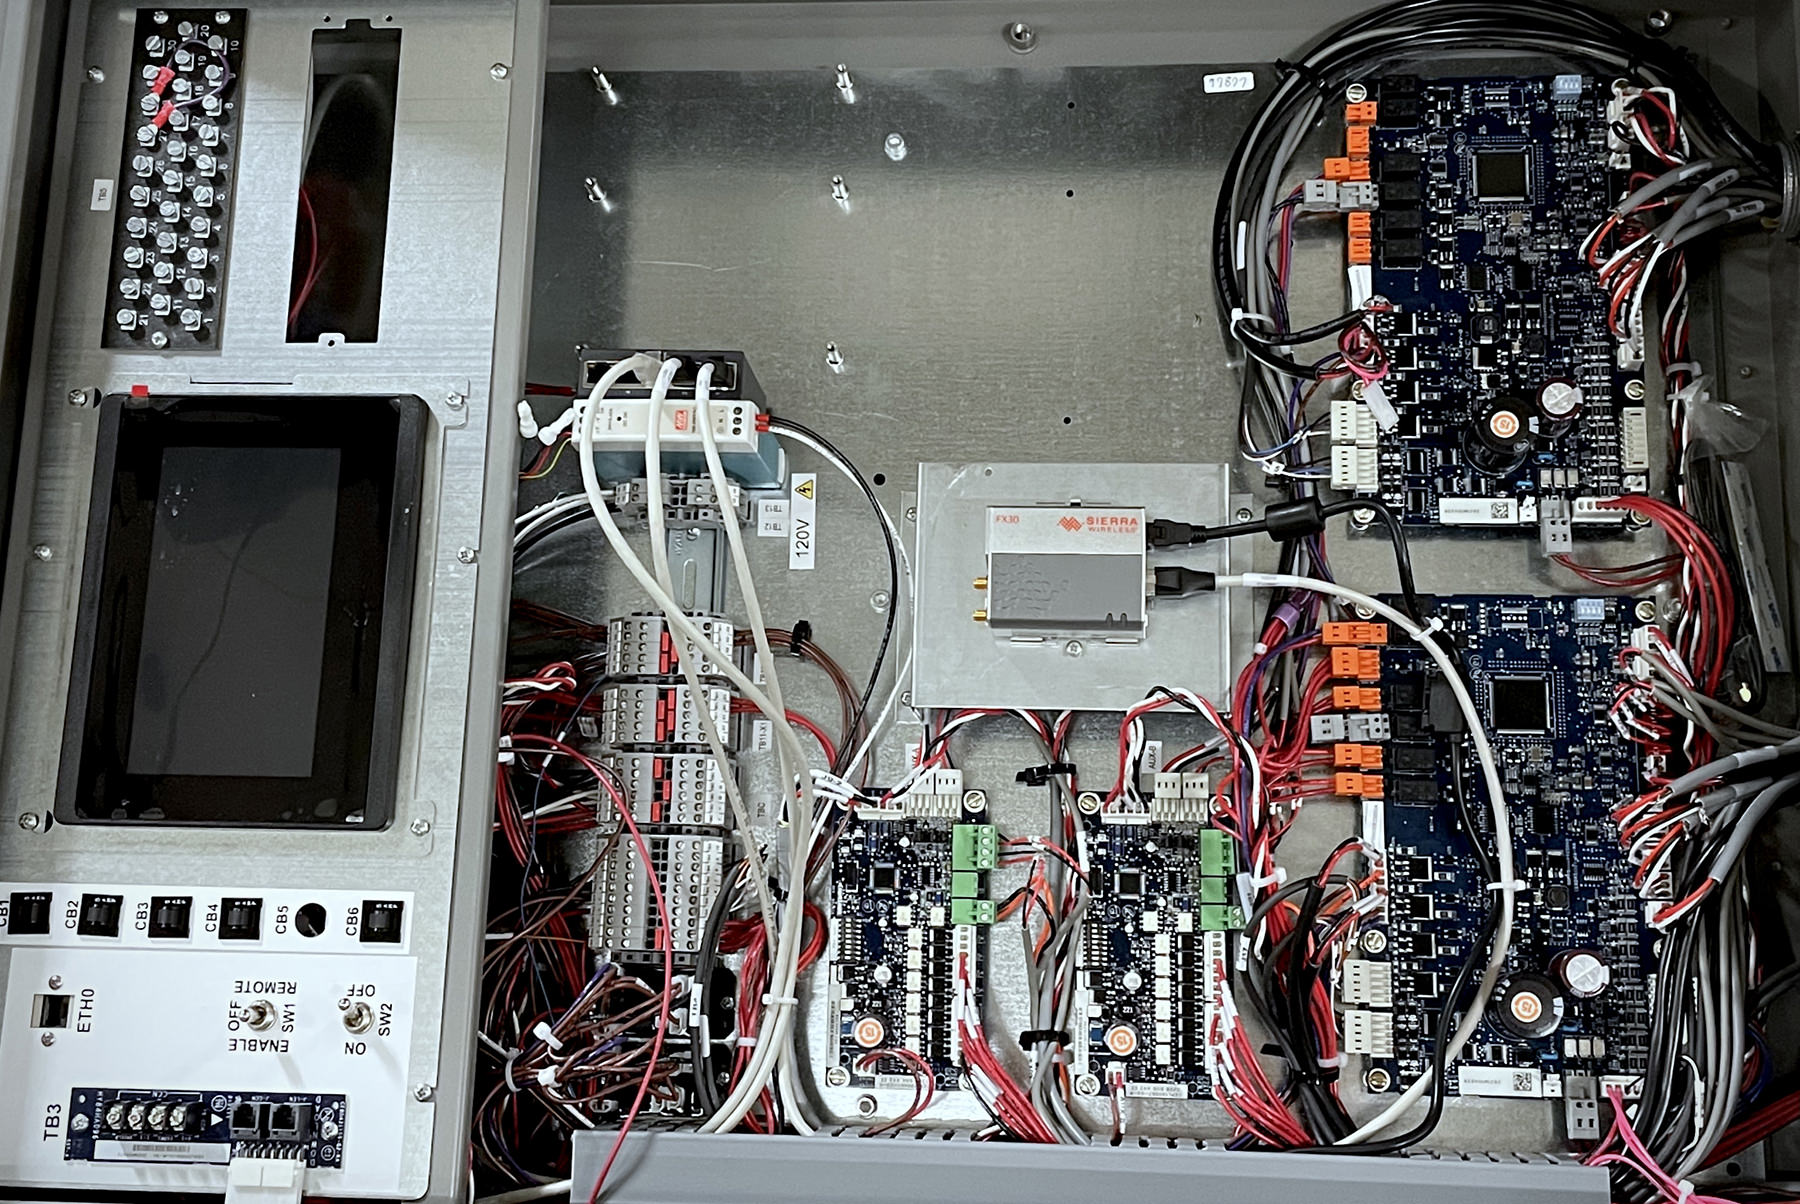 A control box assembly unit